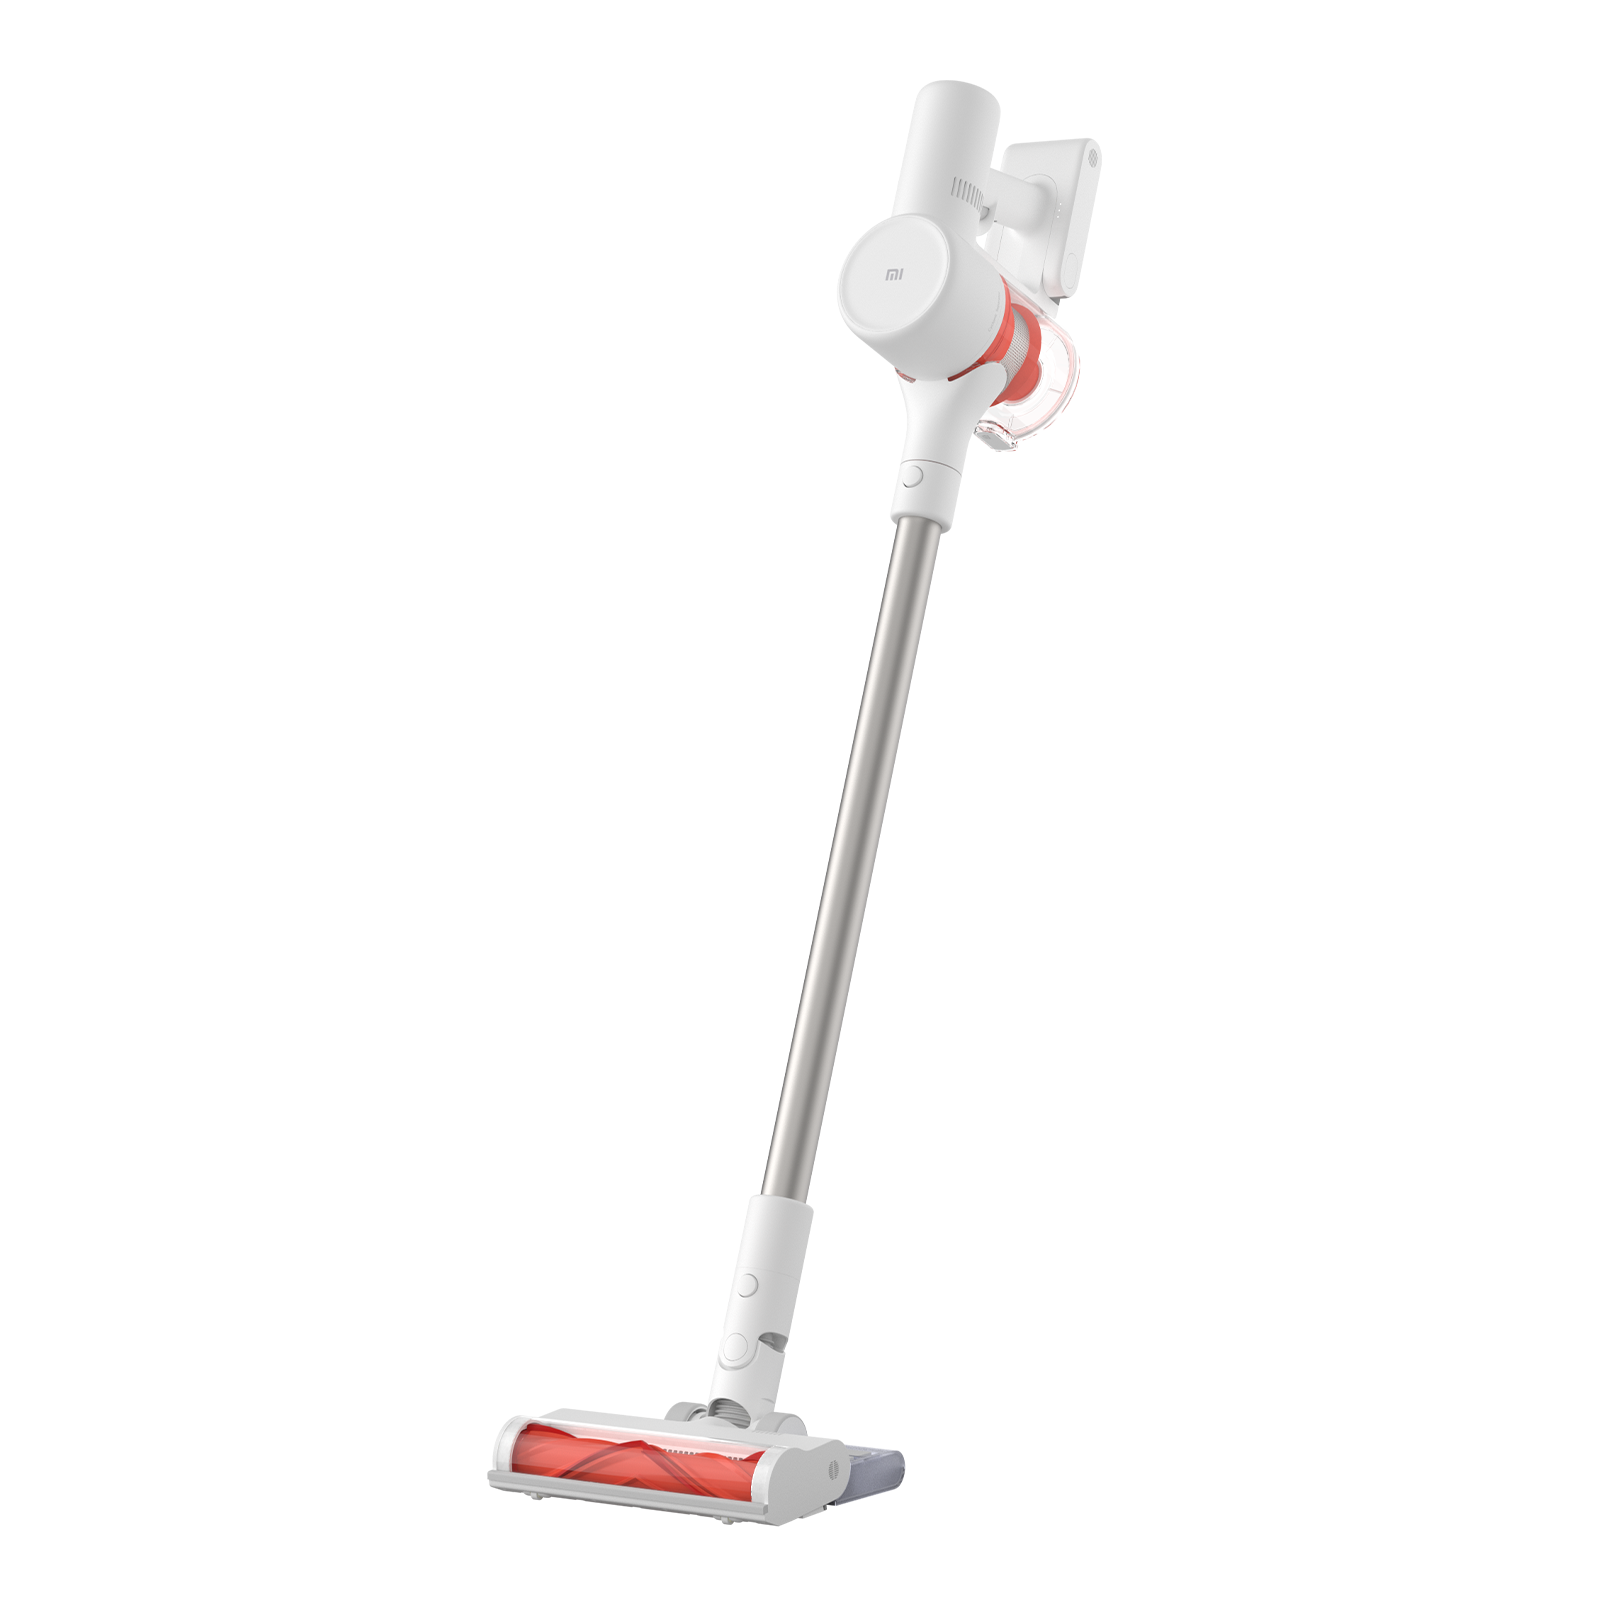 Mi Handheld Vacuum Cleaner G10 Белый